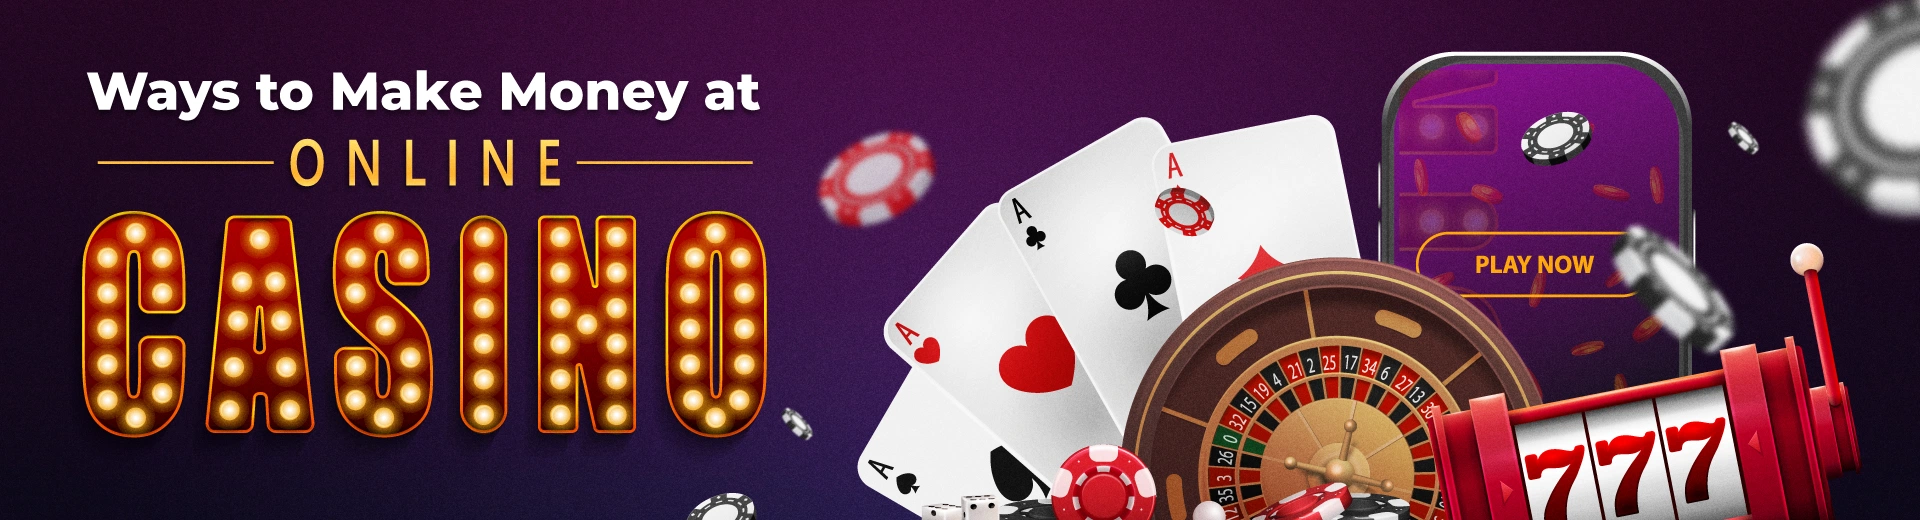 5 Fast Ways to Make Money at Online Casinos - OKBET casino slots